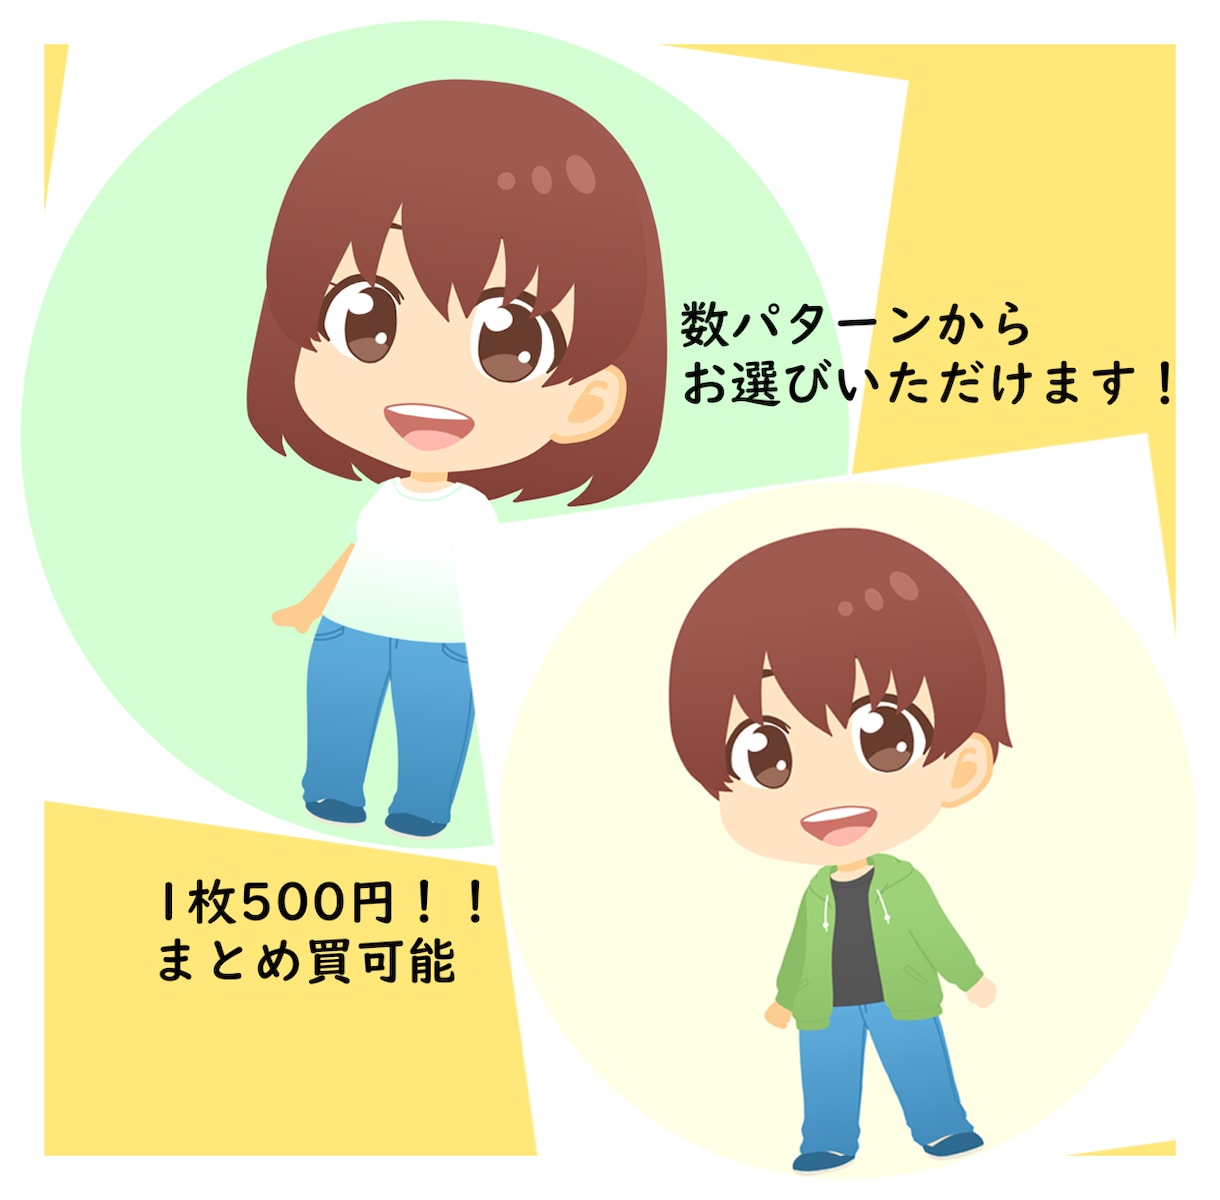 💬Coconala｜Avatar-style illustrations to choose from Haruka Inai 4.9 (10) 5…